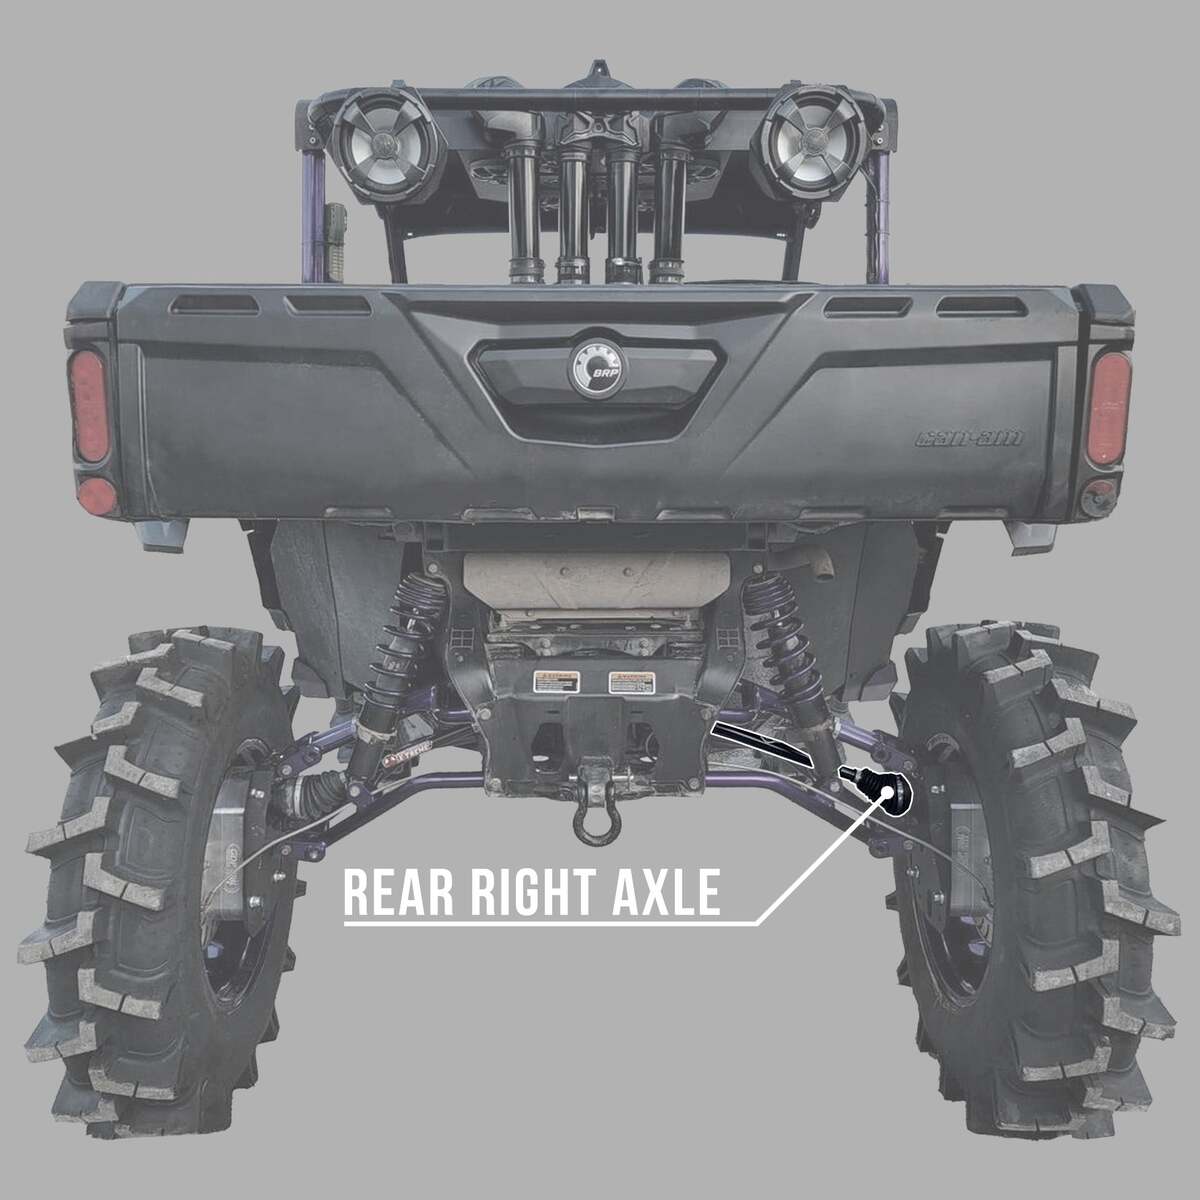 Demon Powersports Polaris Ranger Diesel Demon Xtreme Heavy Duty Axle